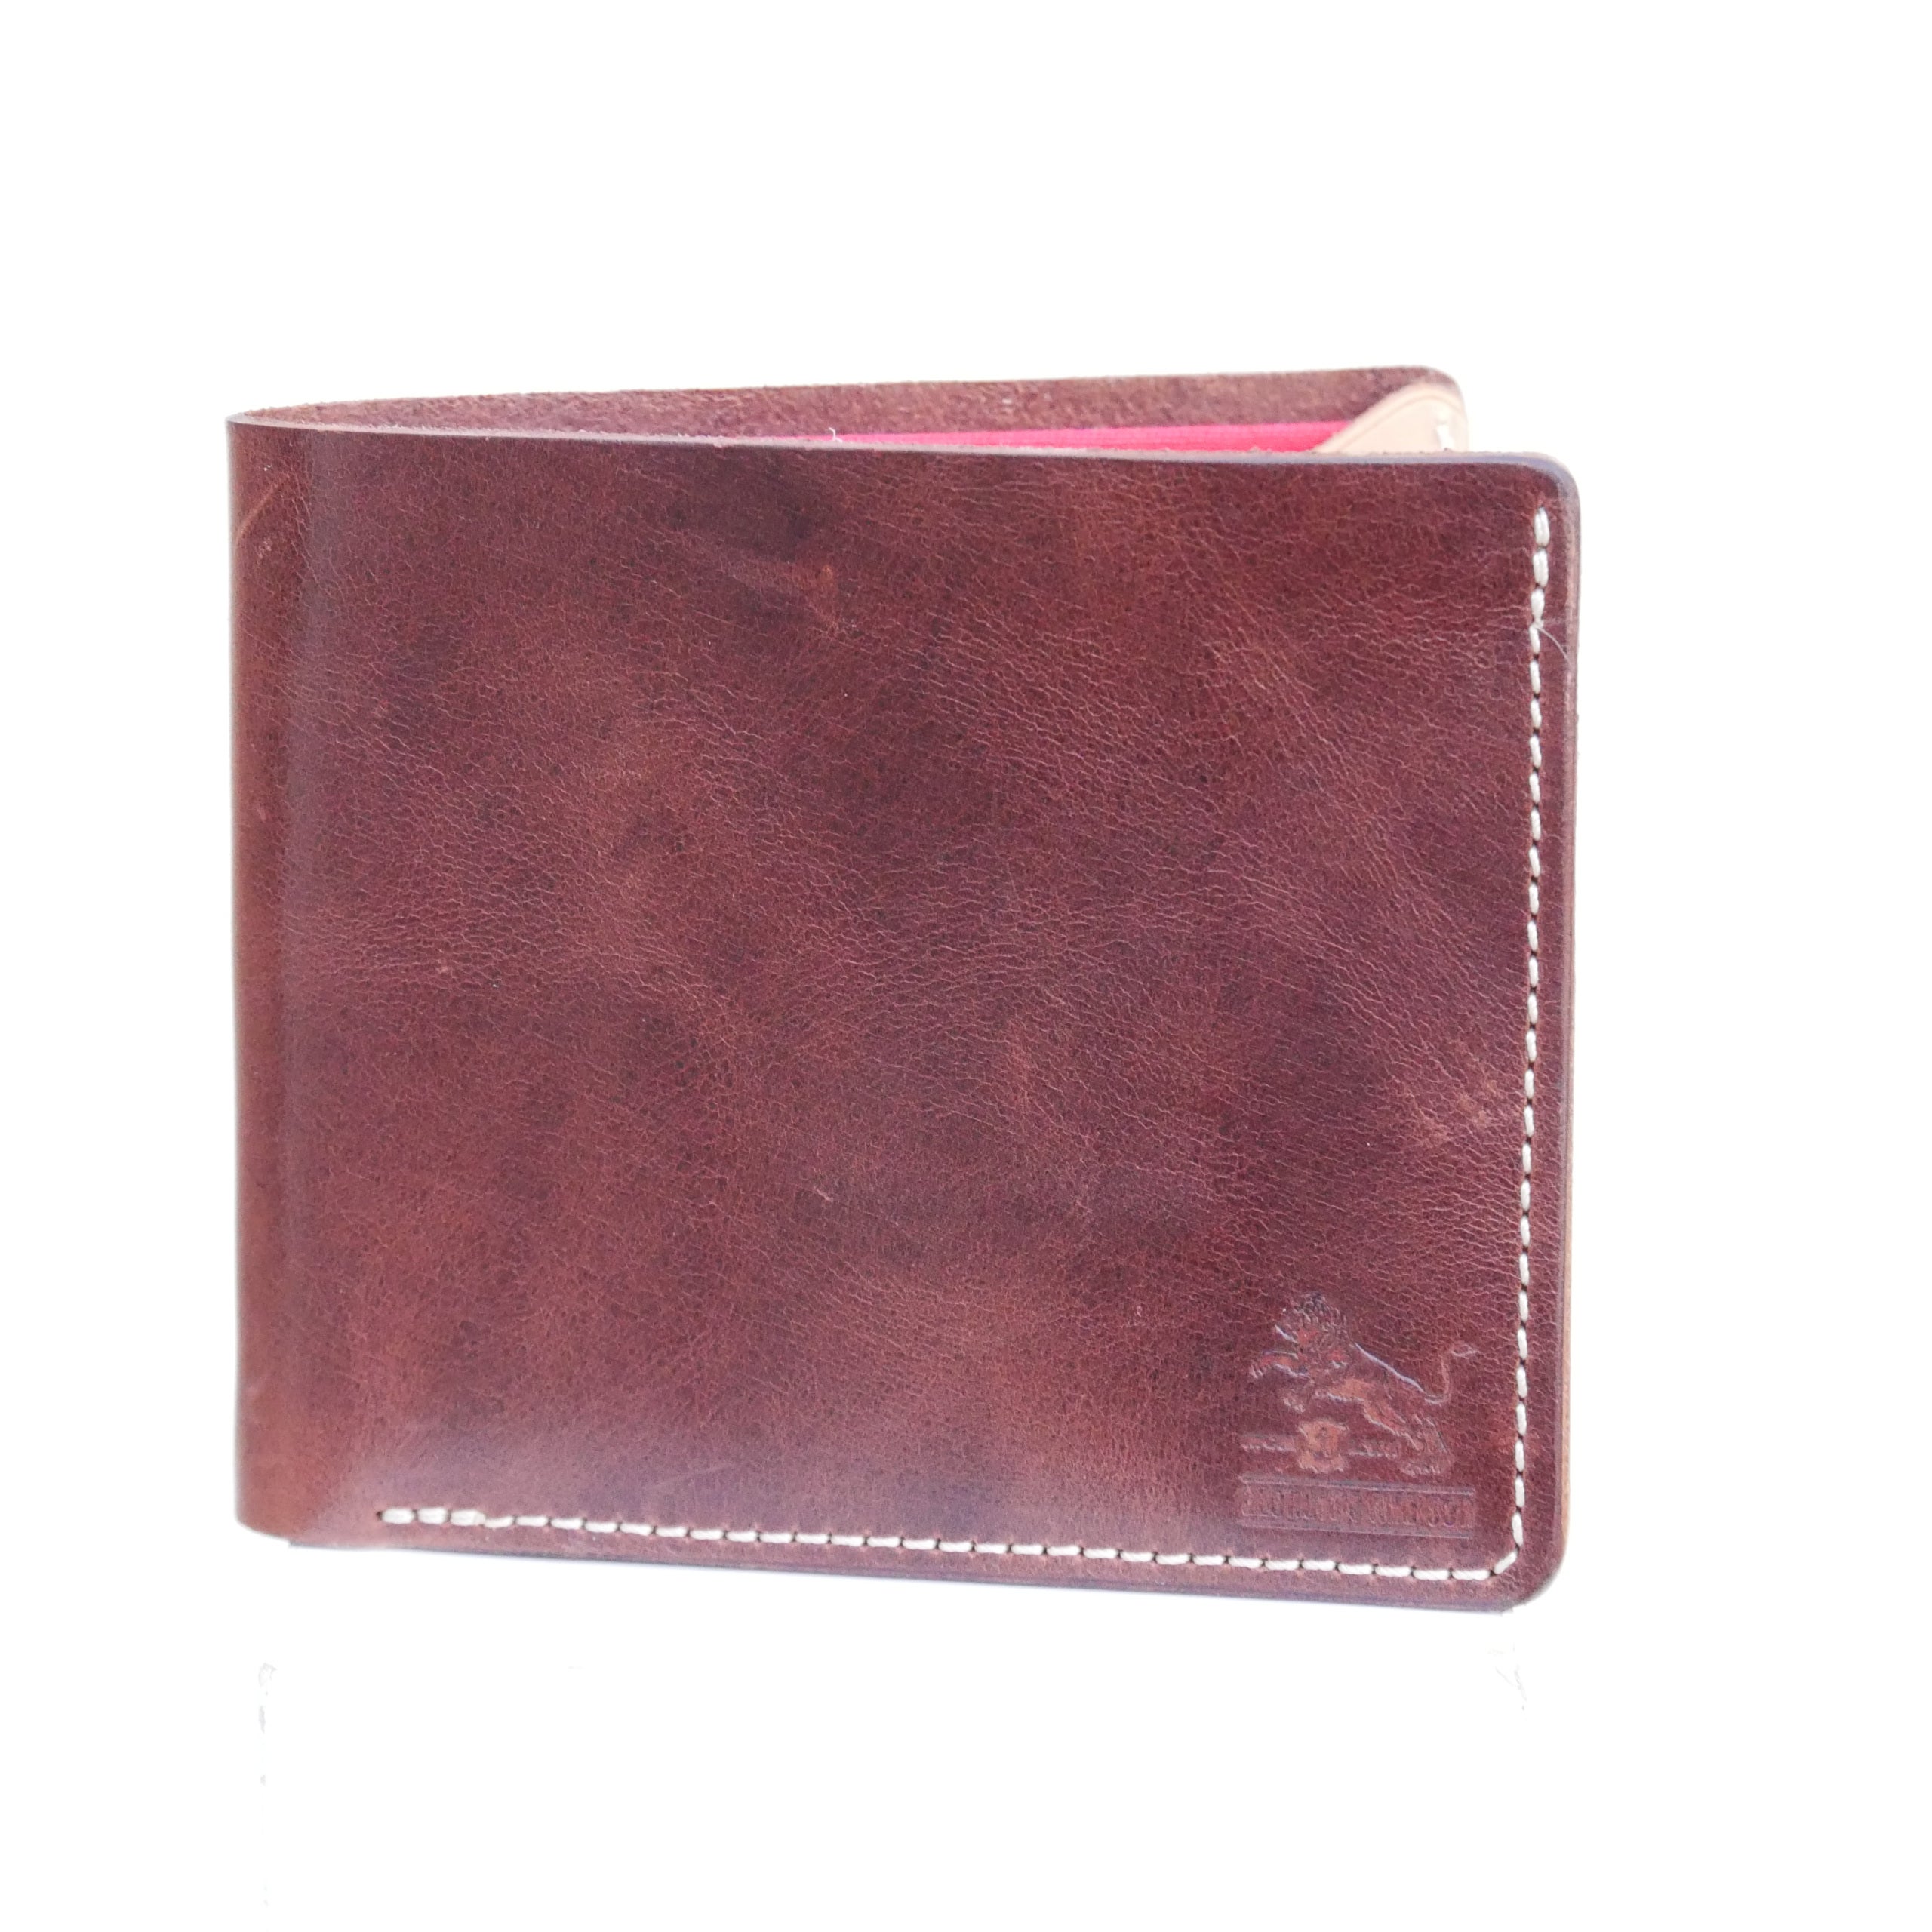 Buy Woodland Black Men's Leather Formal Regular Wallet at Amazon.in